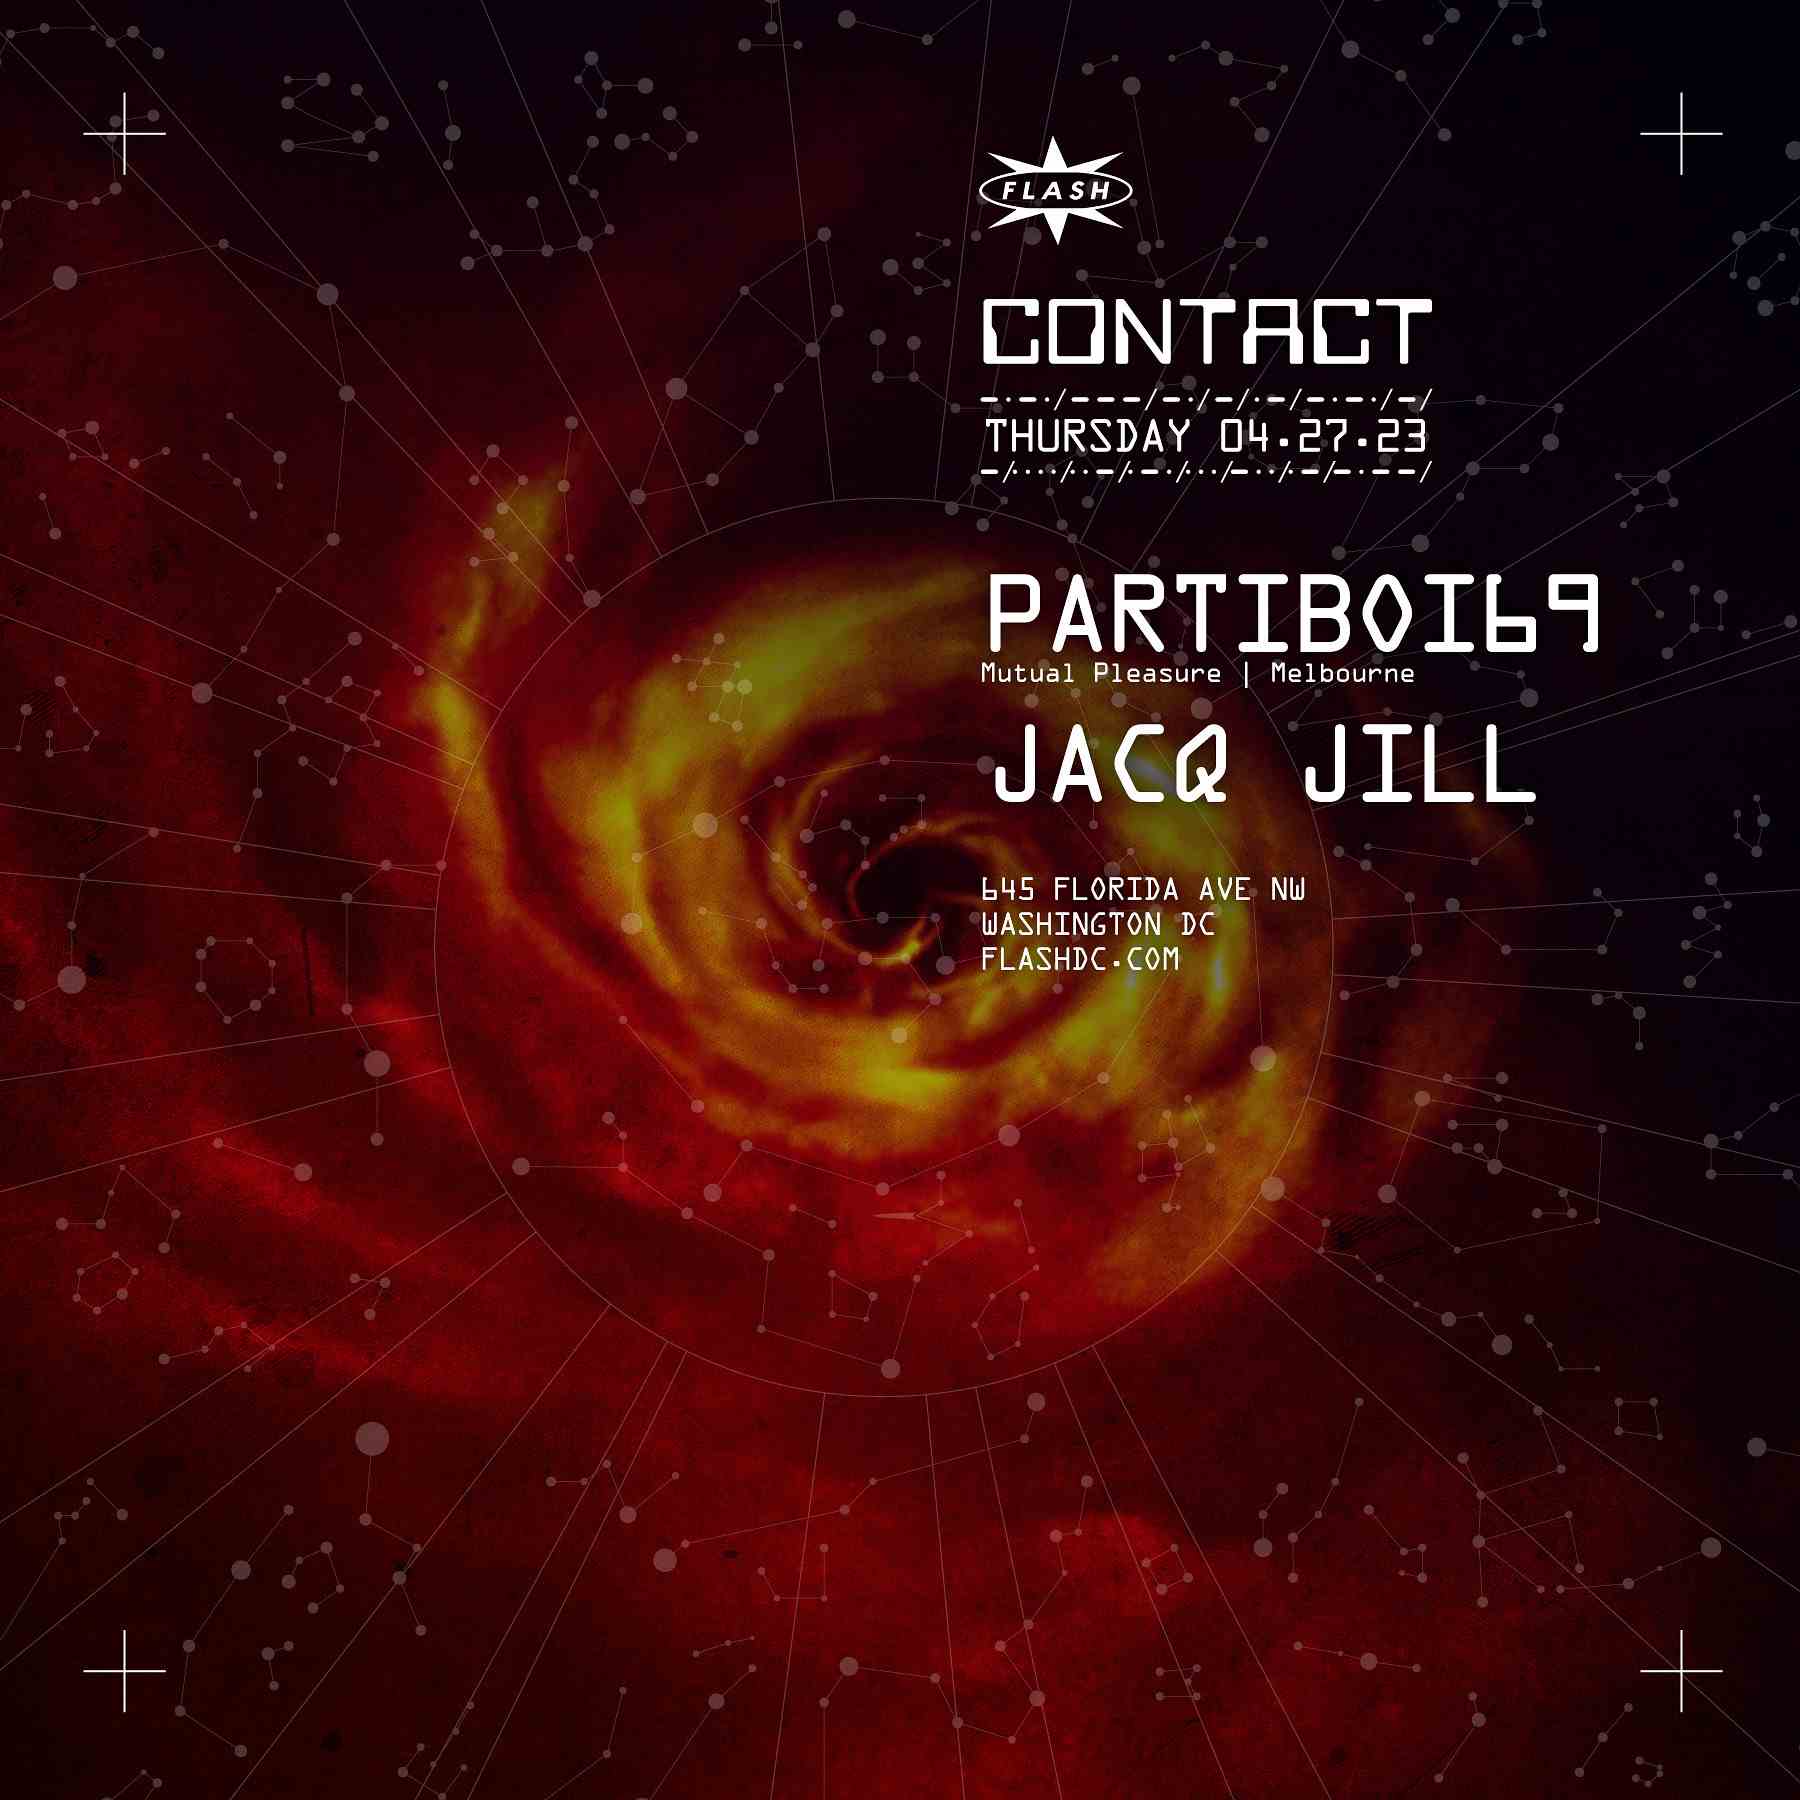 CONTACT: Partiboi69 event flyer